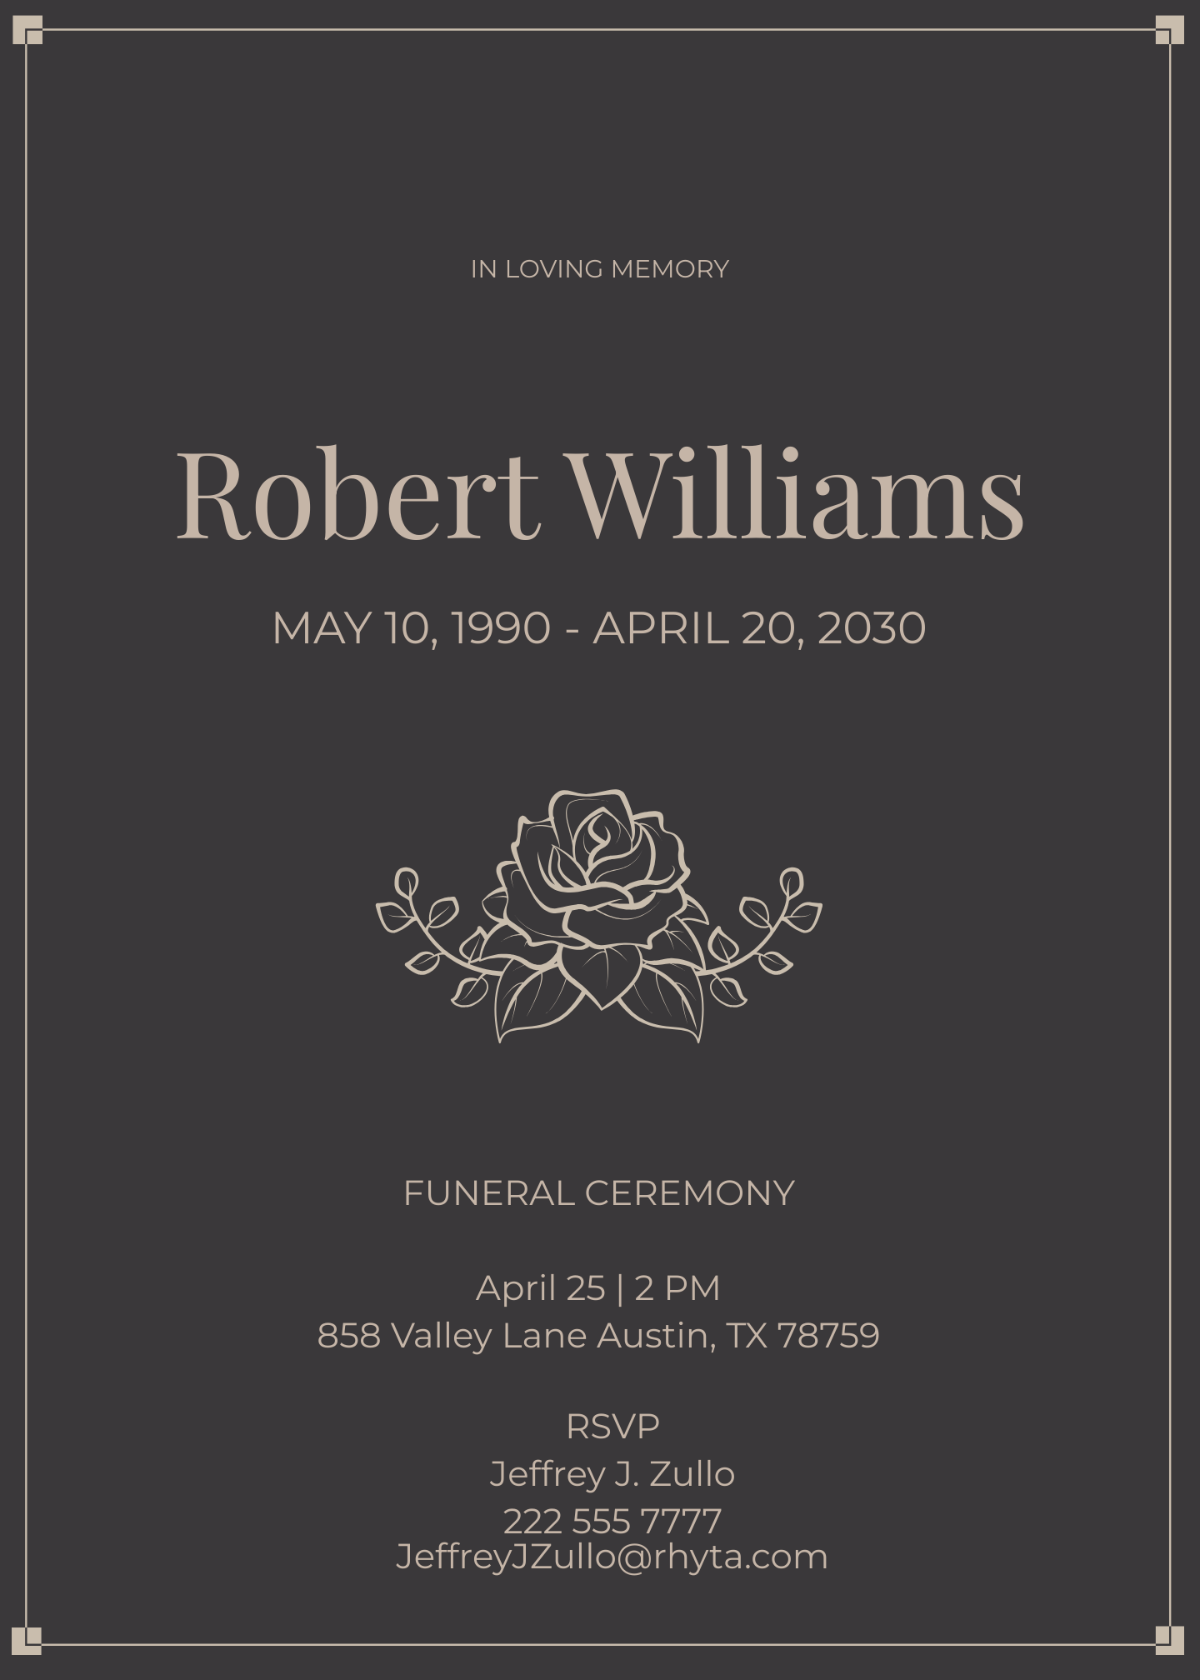 Sample Funeral Invitation Card